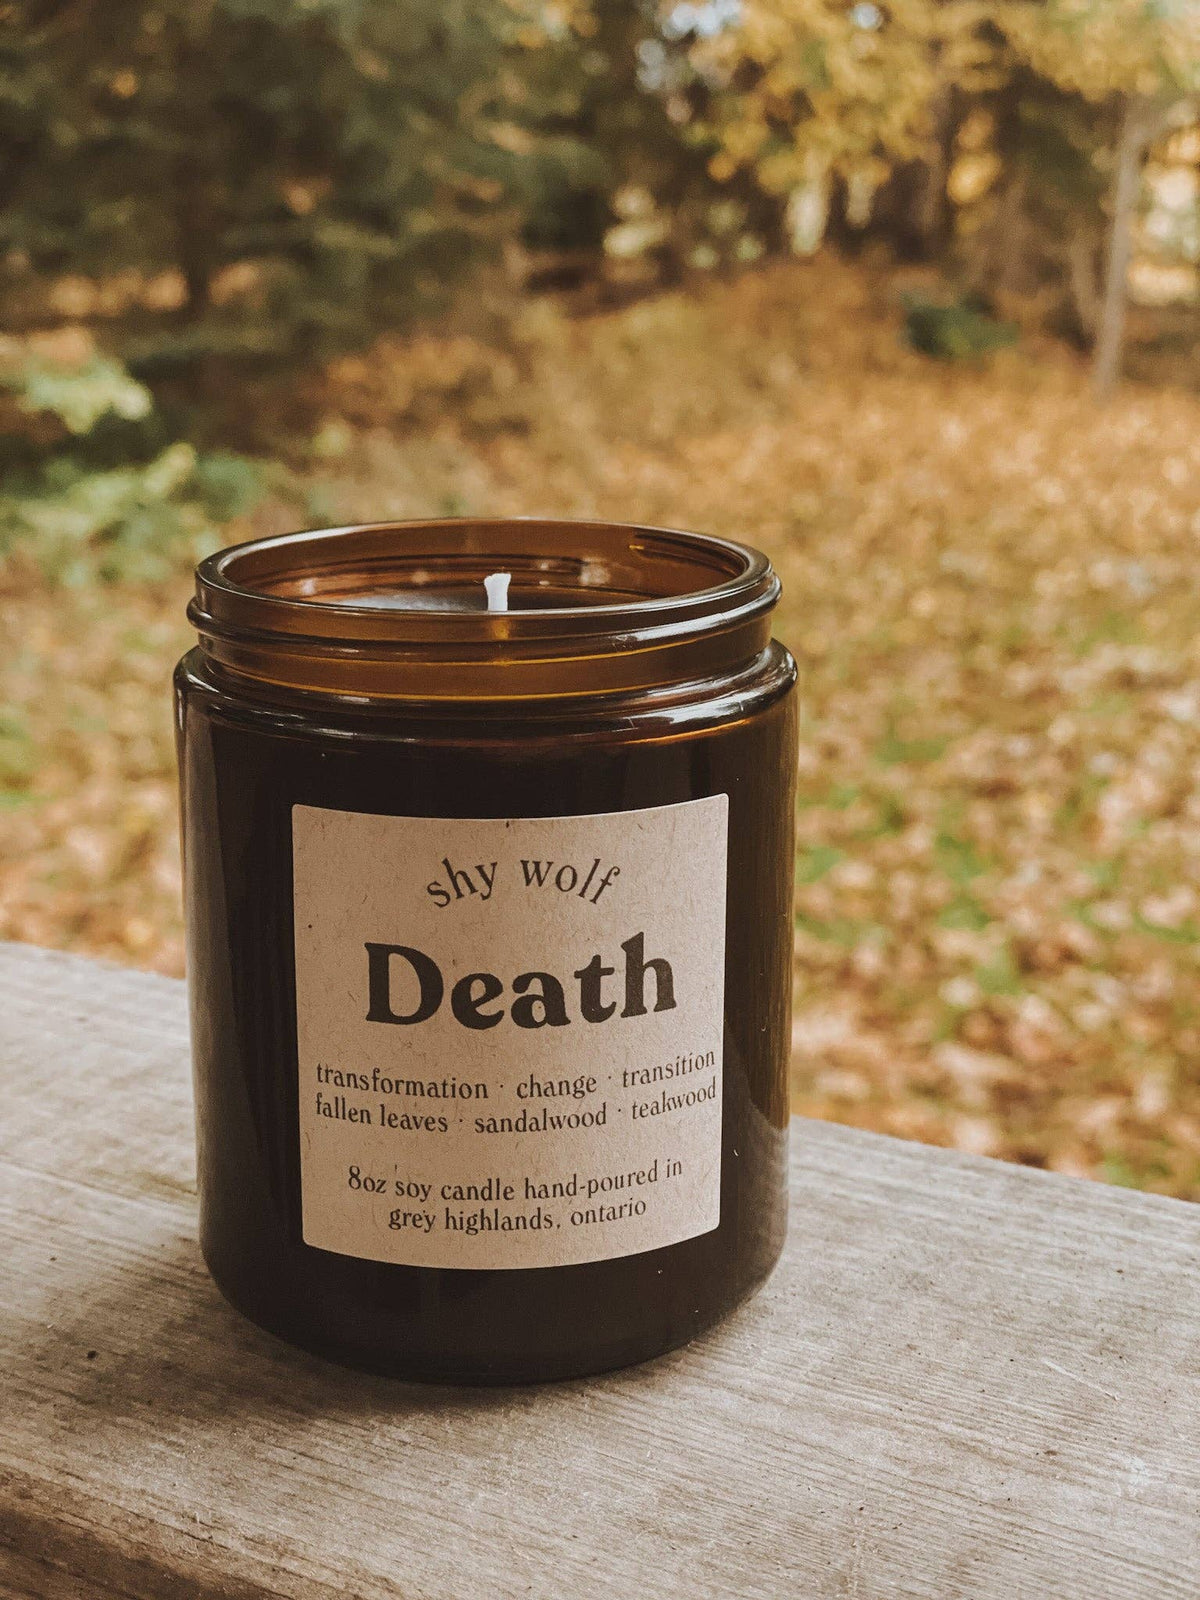 Death Tarot Card Candle - Black Wax Soy Candle, Sandalwood